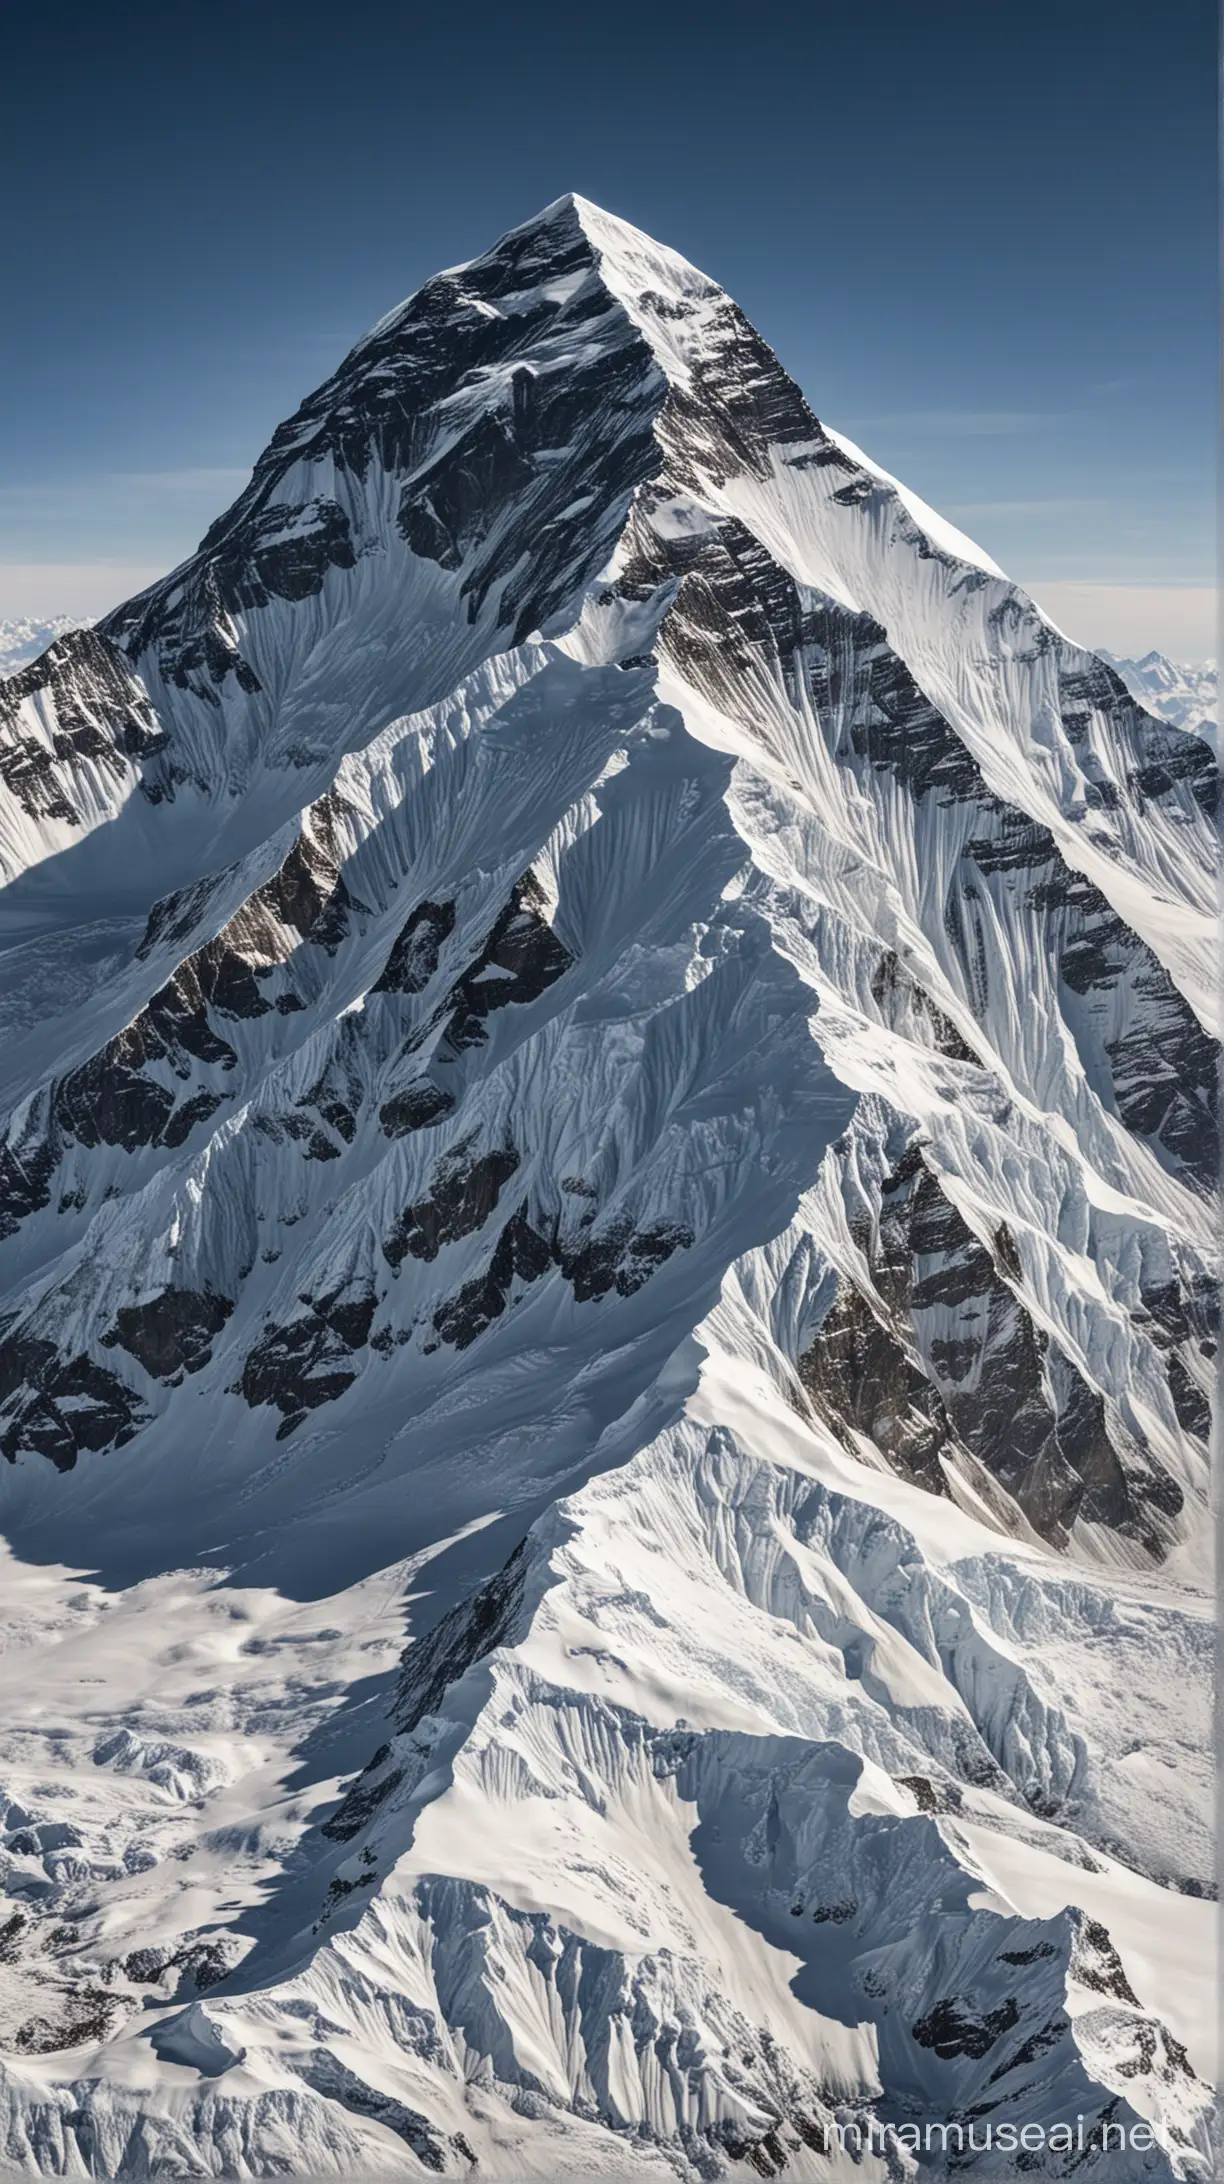 Majestic Mount Everest Landscape SnowCapped Summit Against Clear Blue Sky